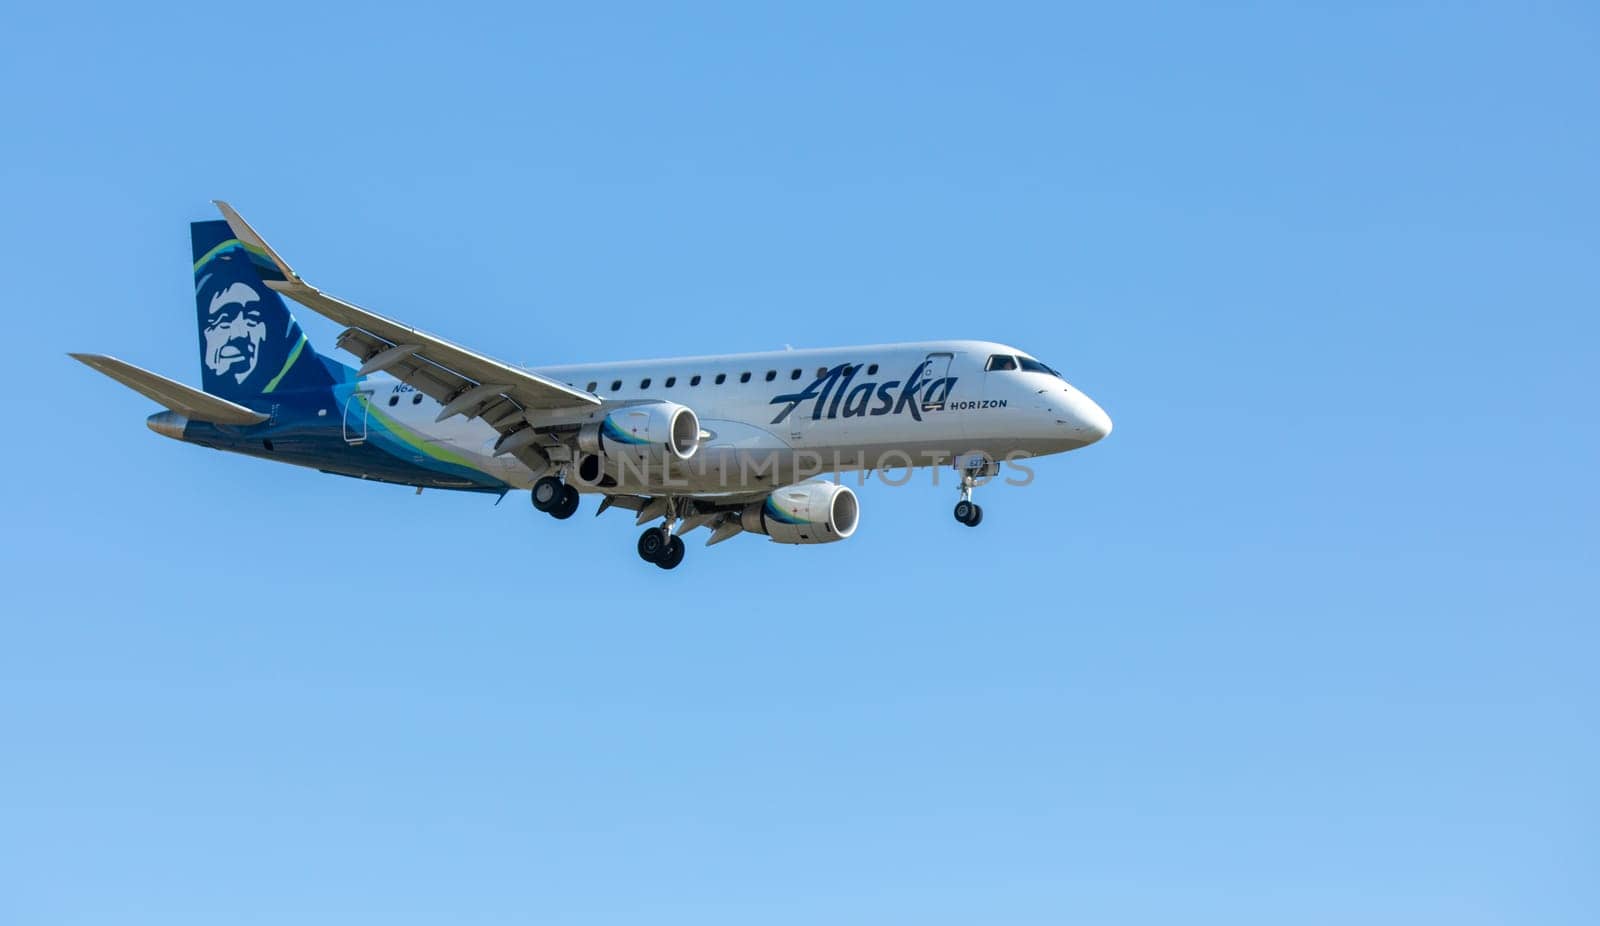 Boise, Idaho - May 23, 2022: Horizon flying as Alaskan airlines flight landing at Boise Airport in Idaho